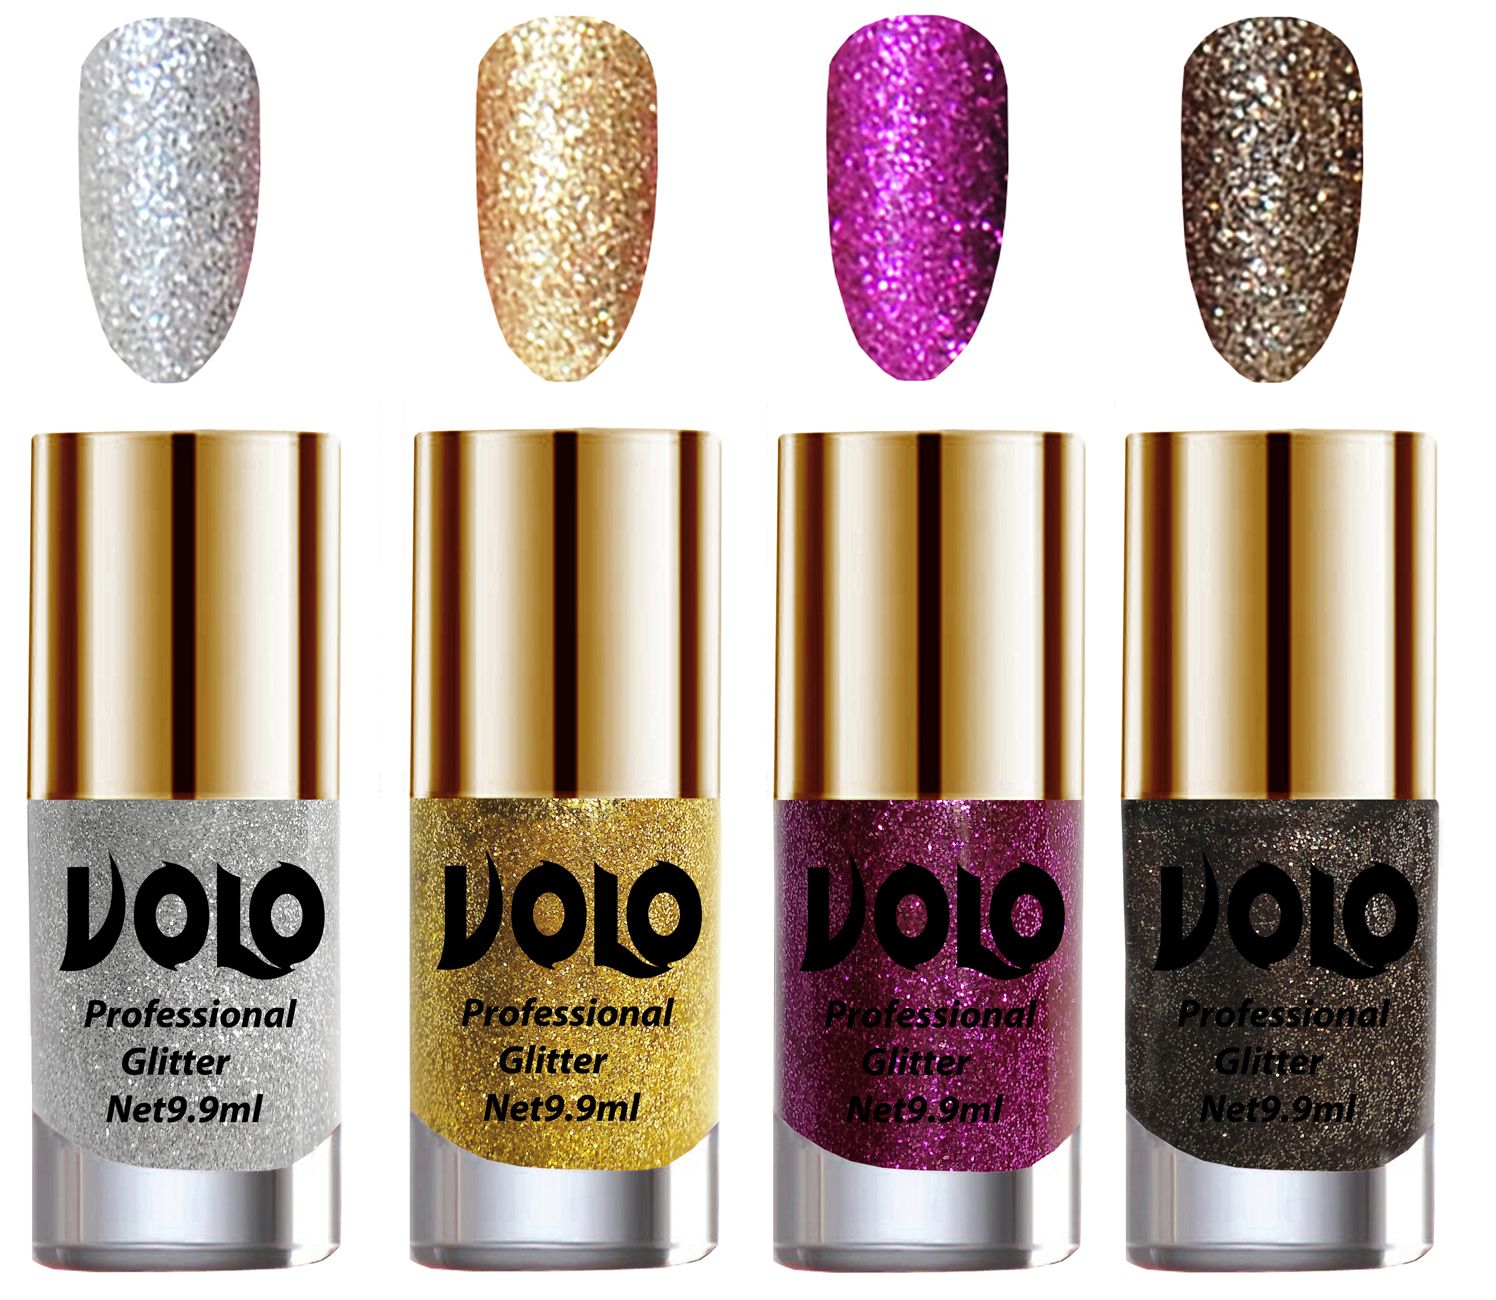     			VOLO Professionally Used Glitter Shine Nail Polish Silver,Gold,Purple Grey Pack of 4 39 mL